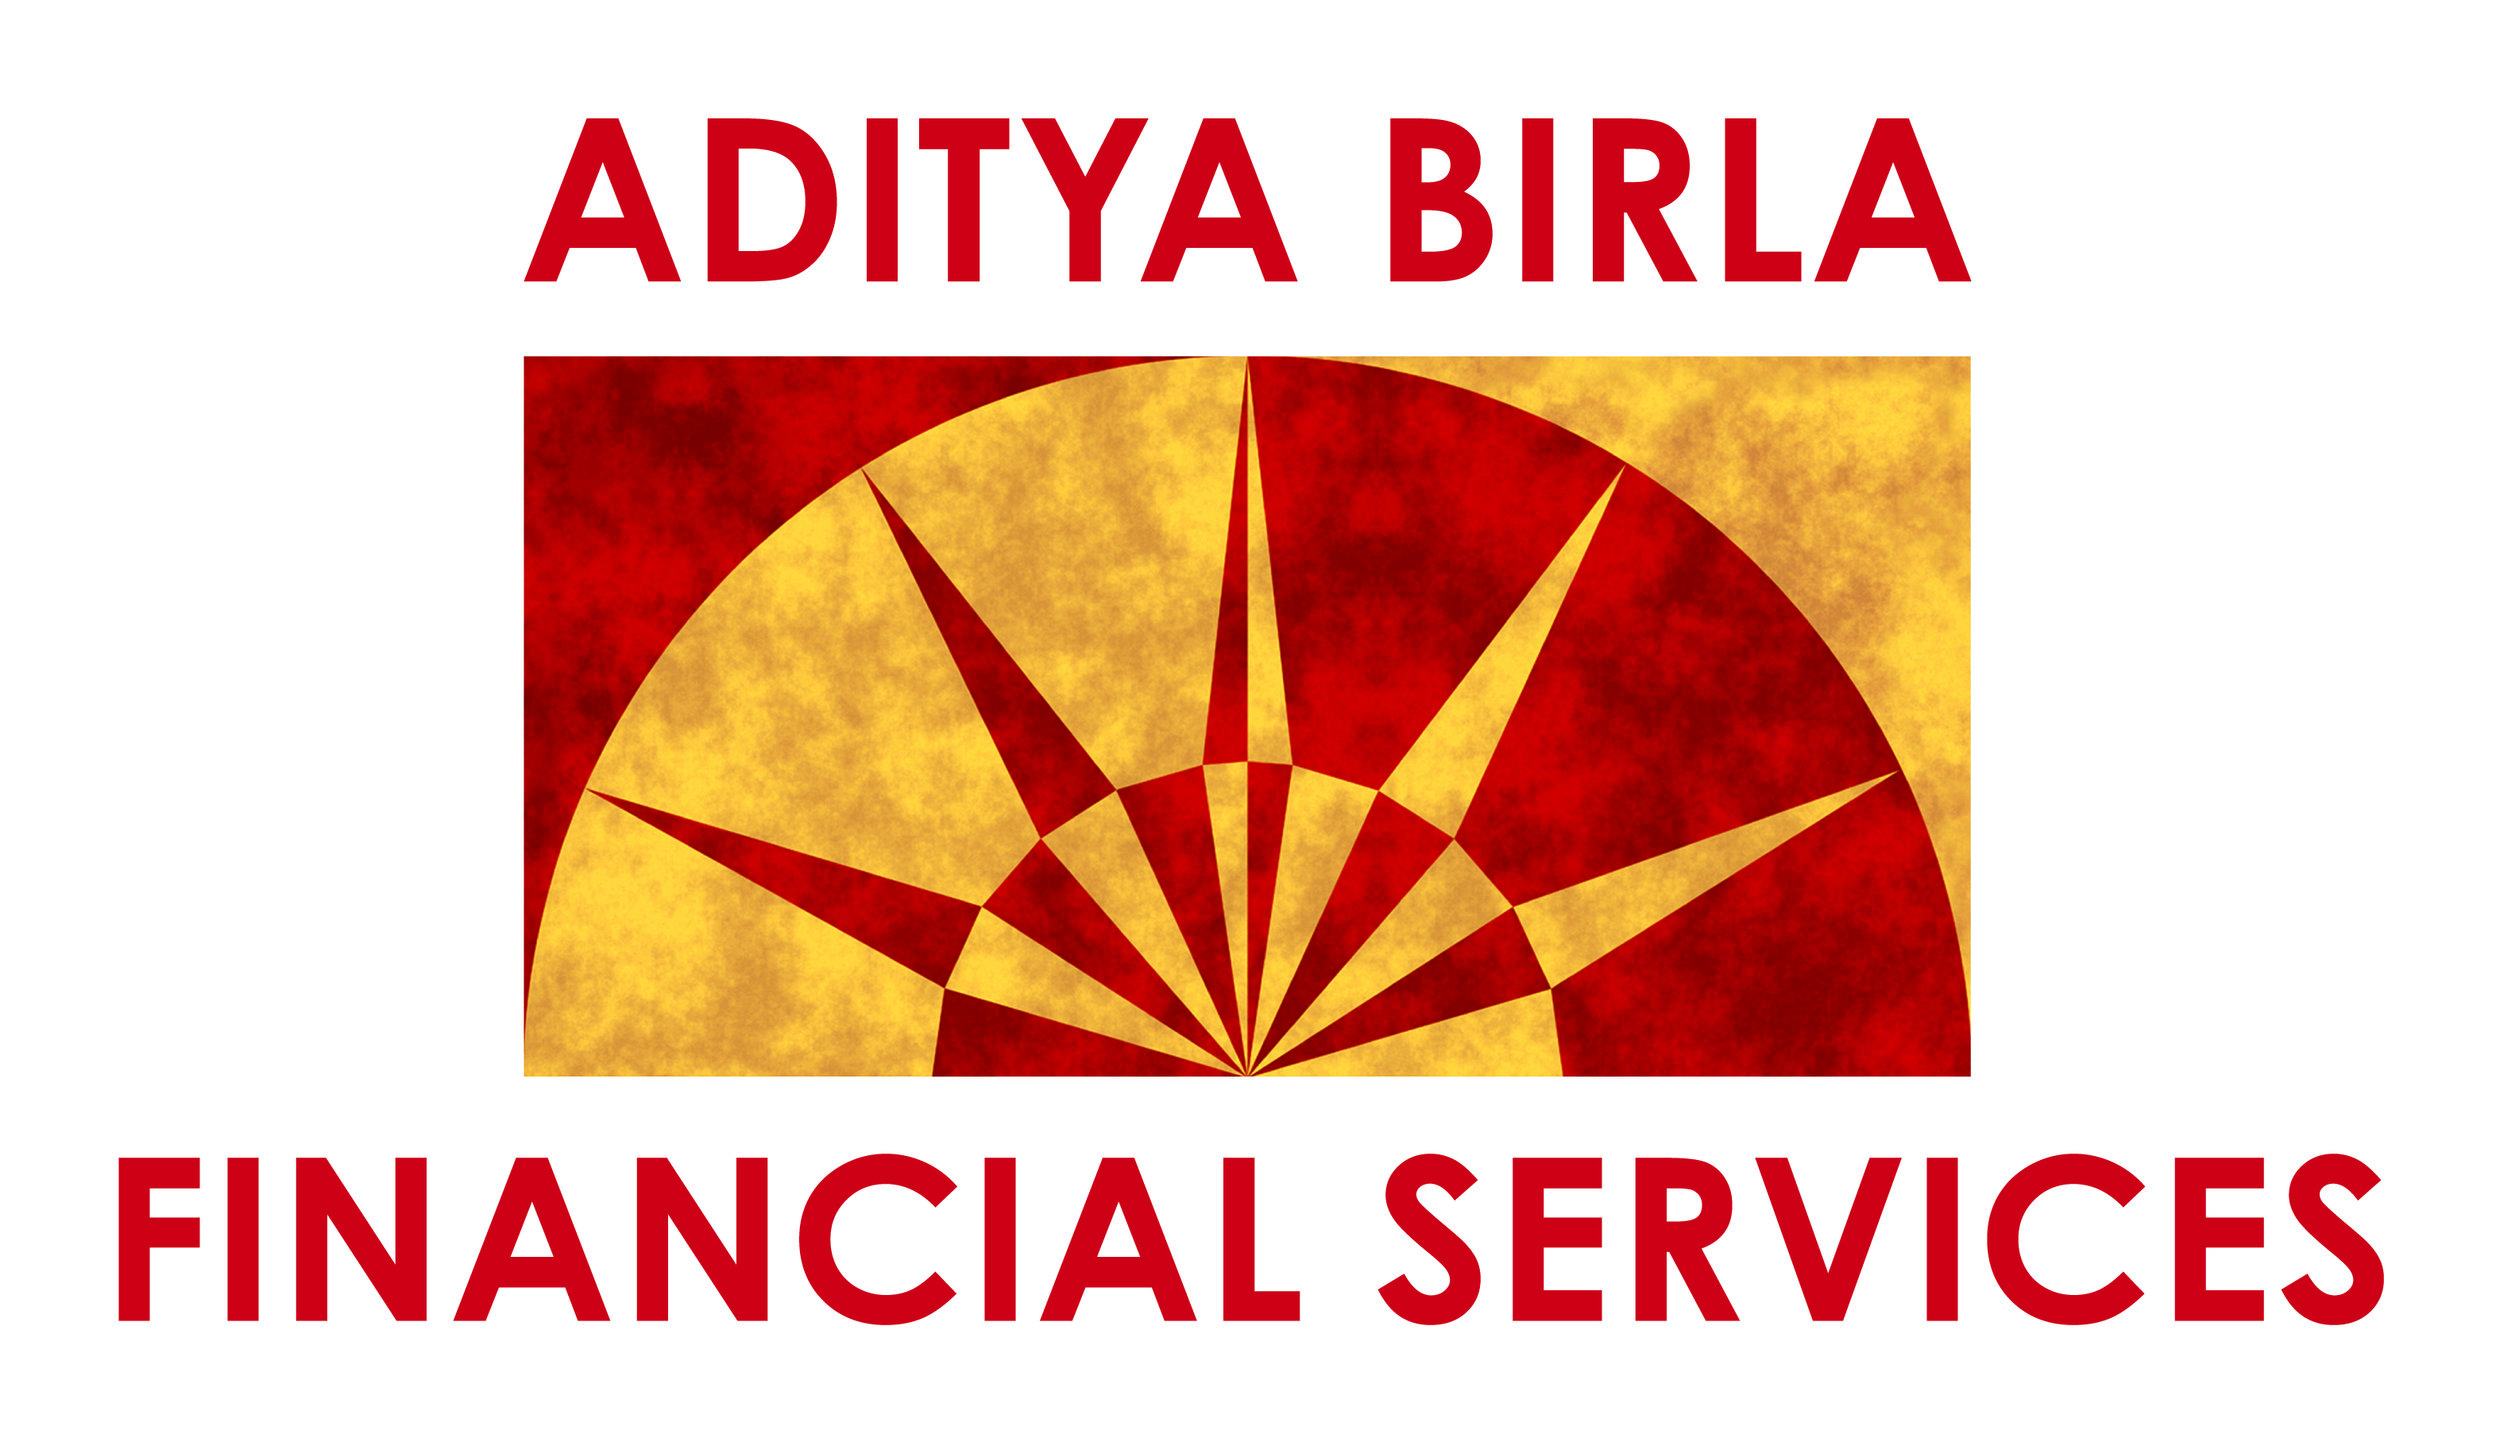 Aditya Birla Financial Services.jpg